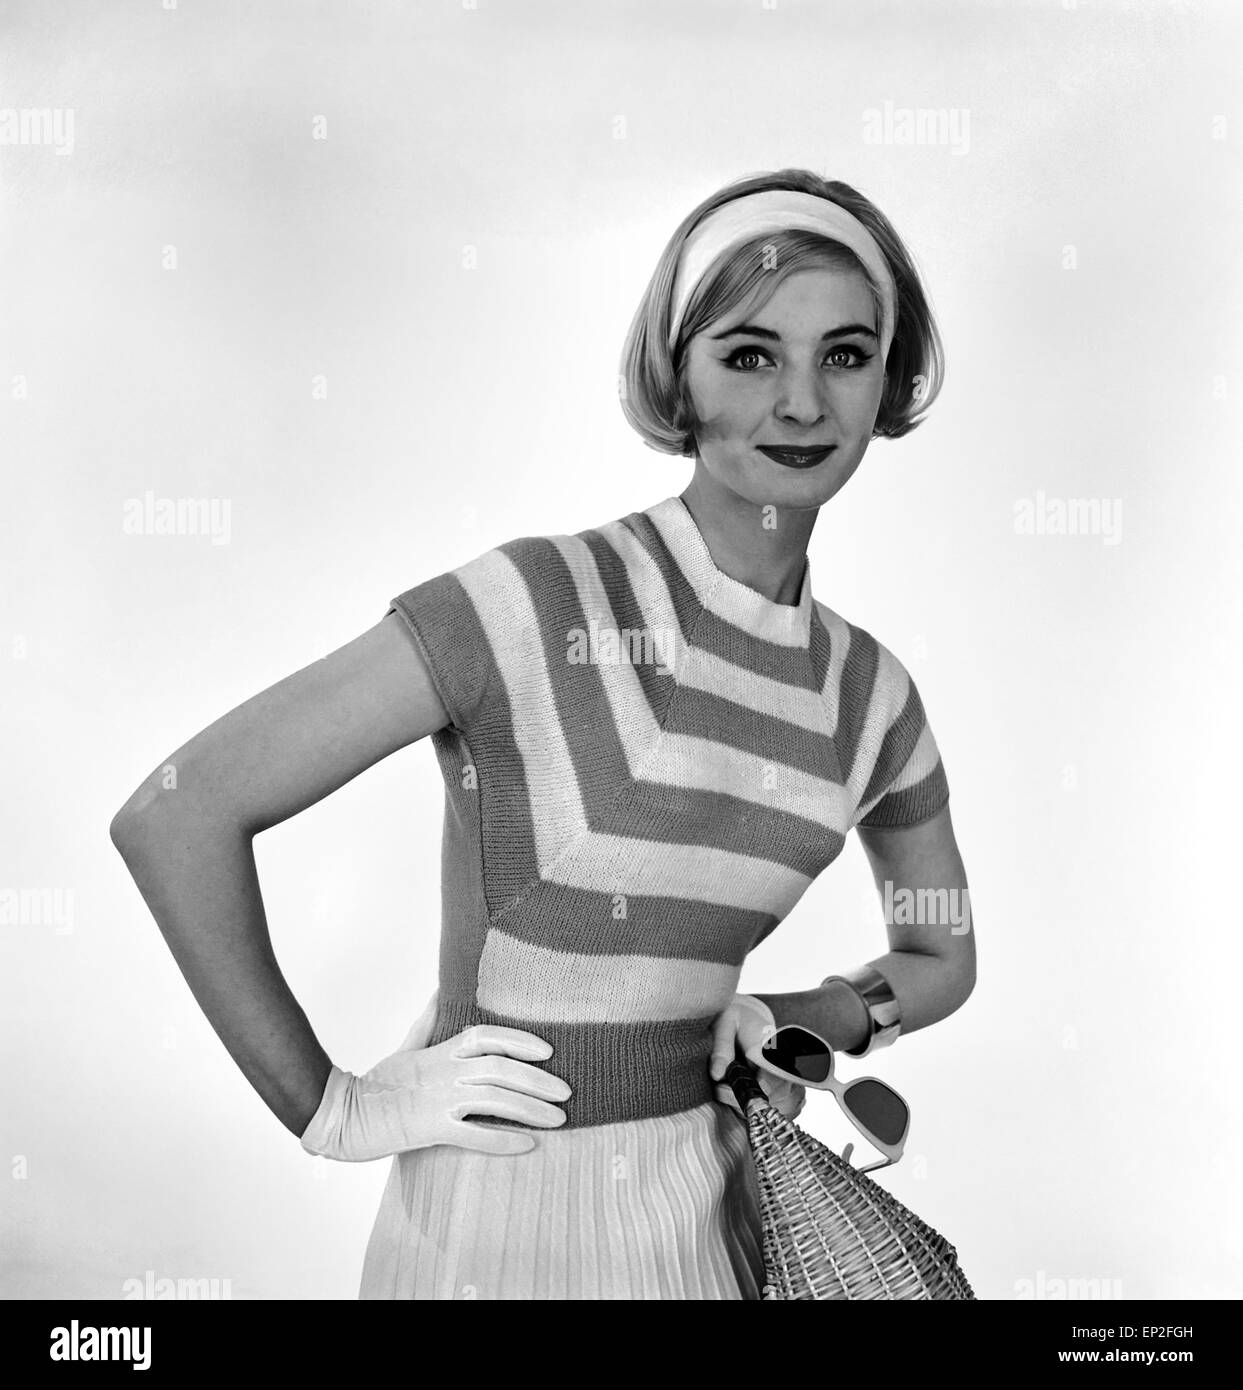 Queen Bee Suit 1950s Knitting Jacket Cardigan Sweater Skirt 